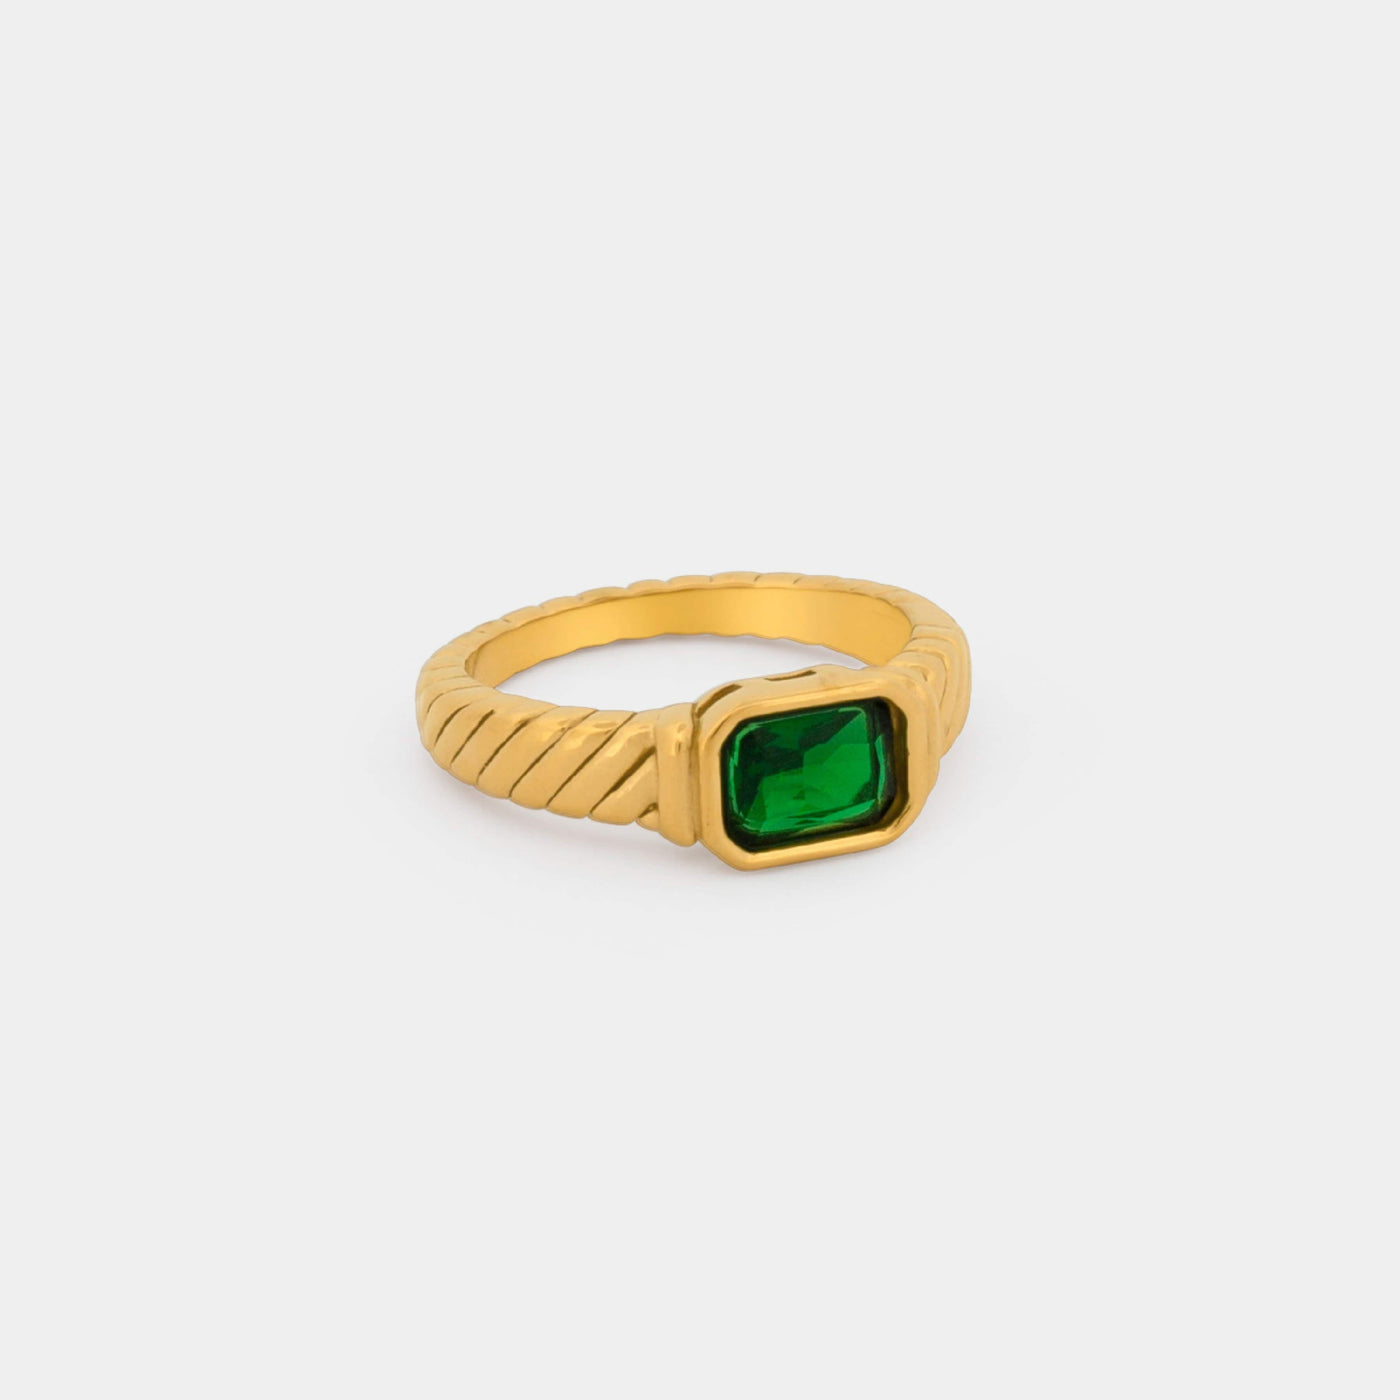 Green Gemstone Signet Ring in stainless steel